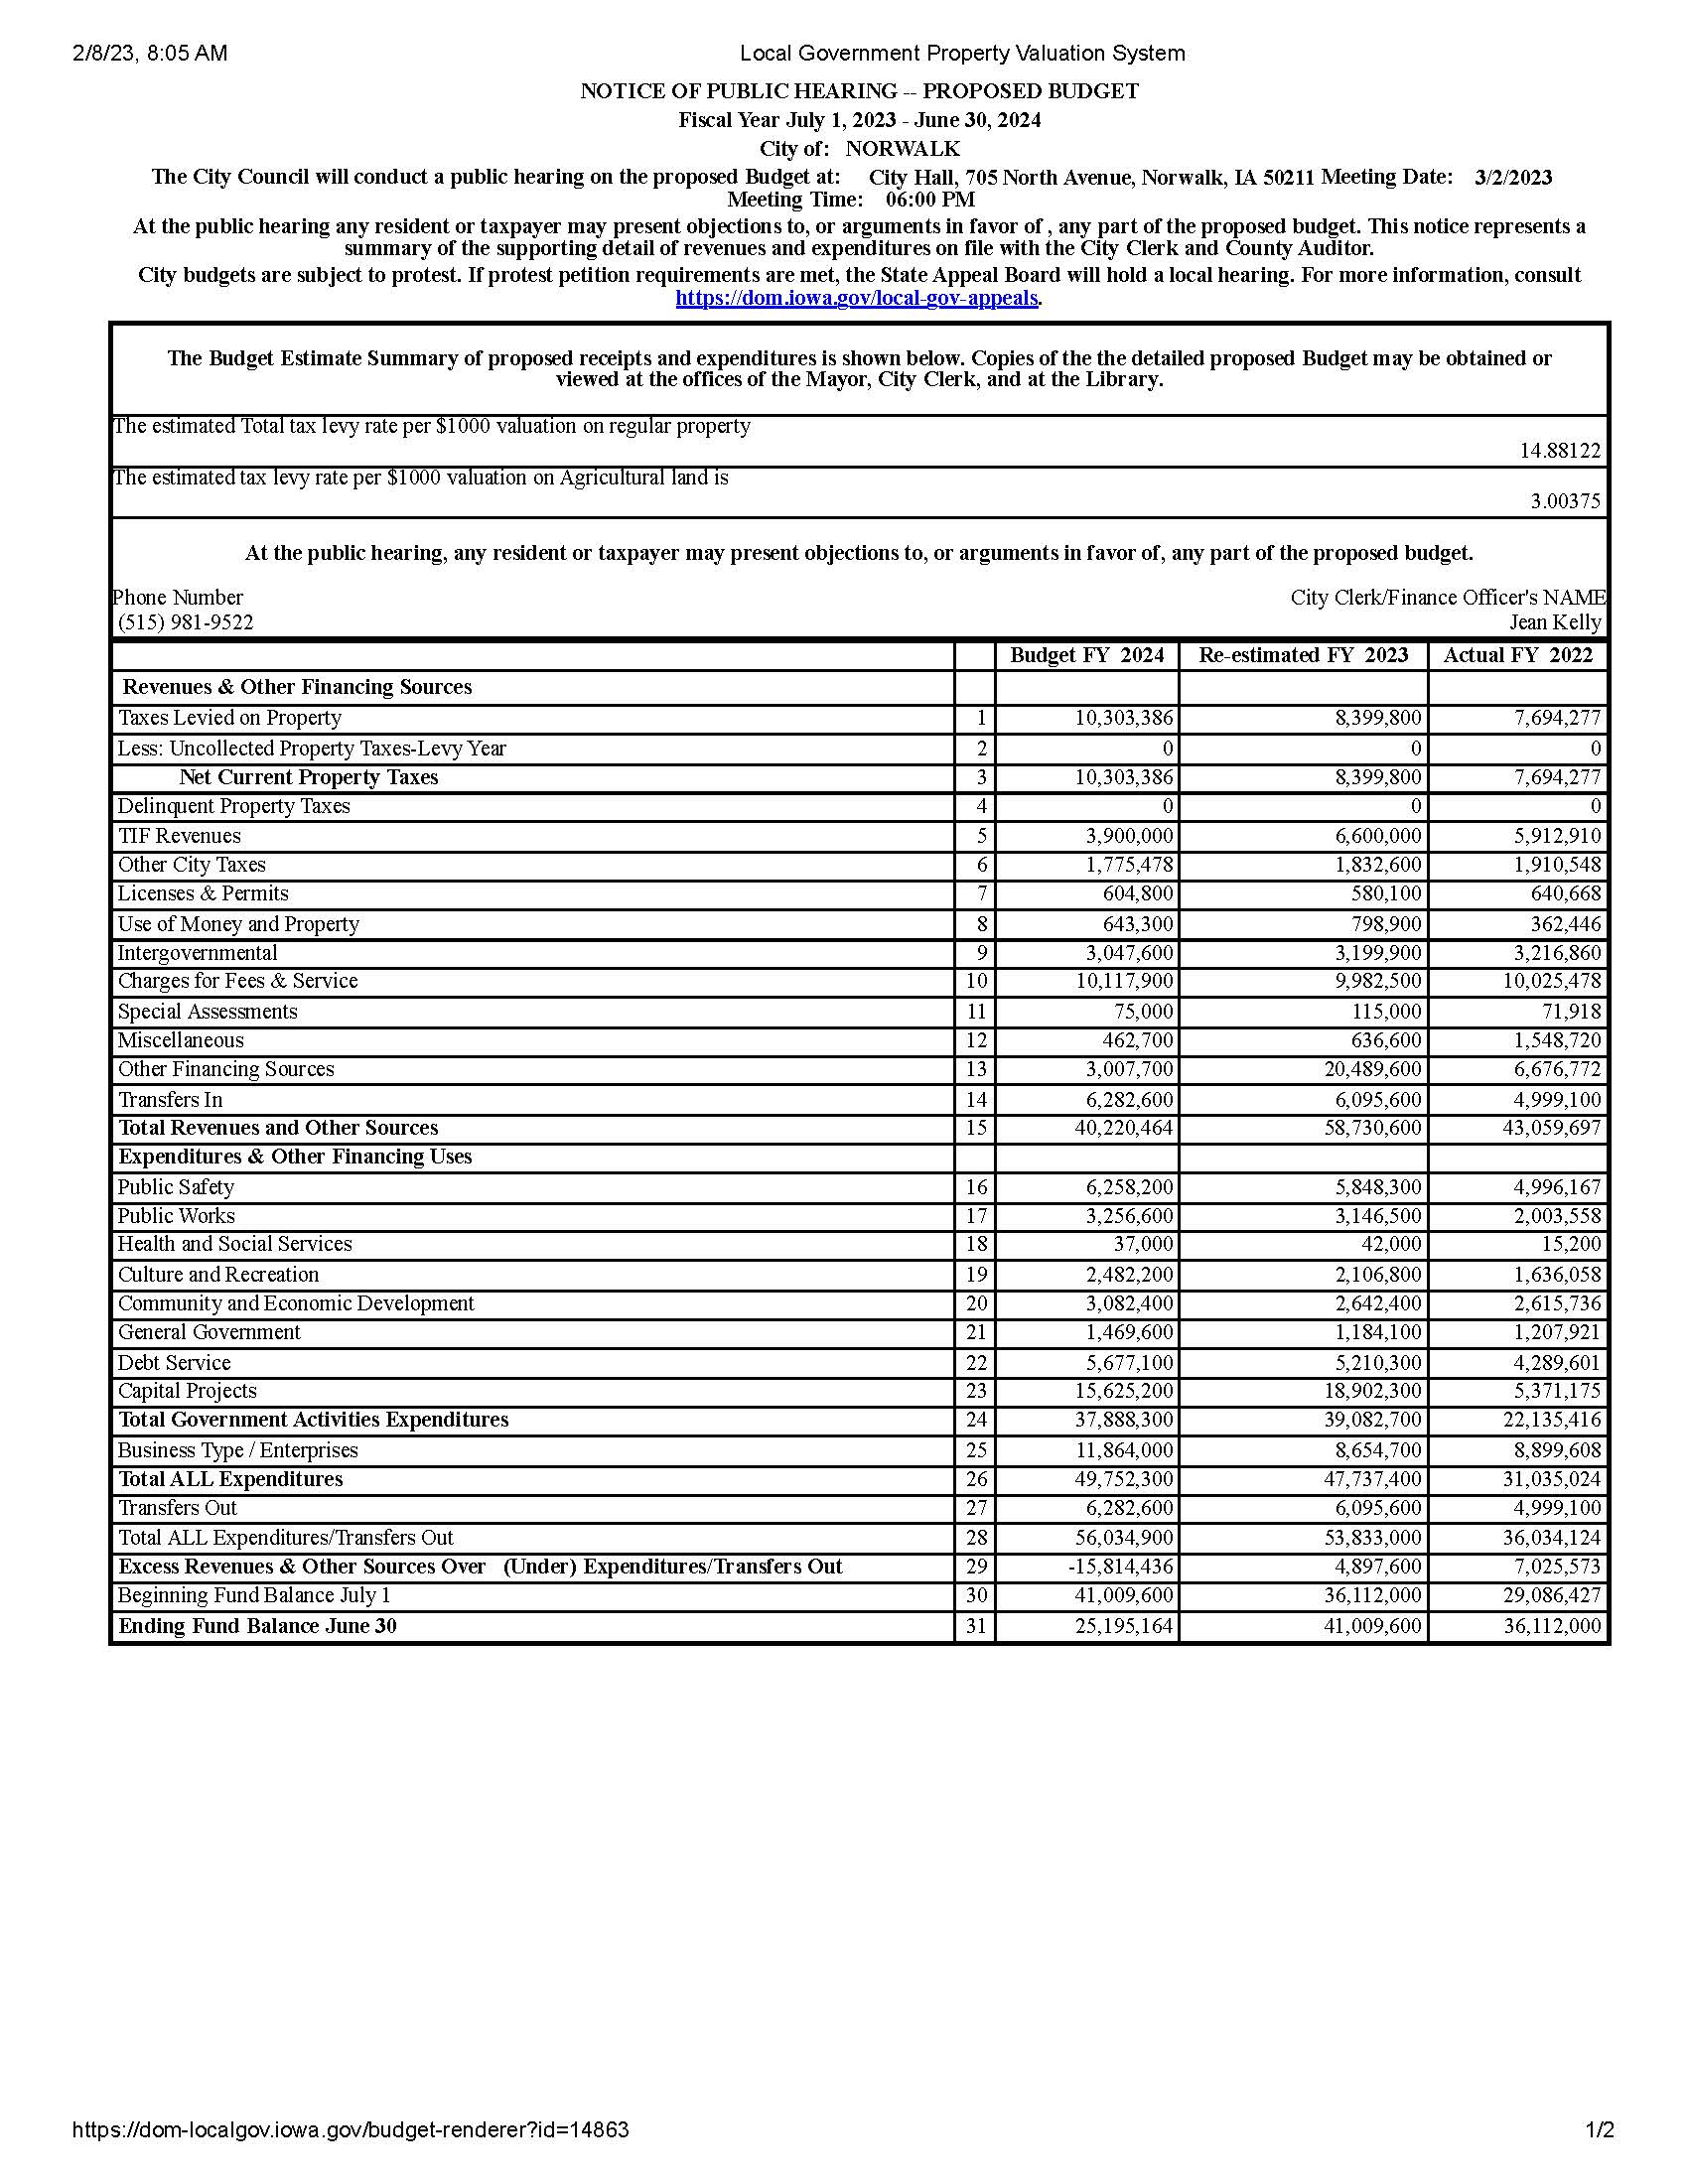 Budget PH Public Notice-3-2-23_Page_1